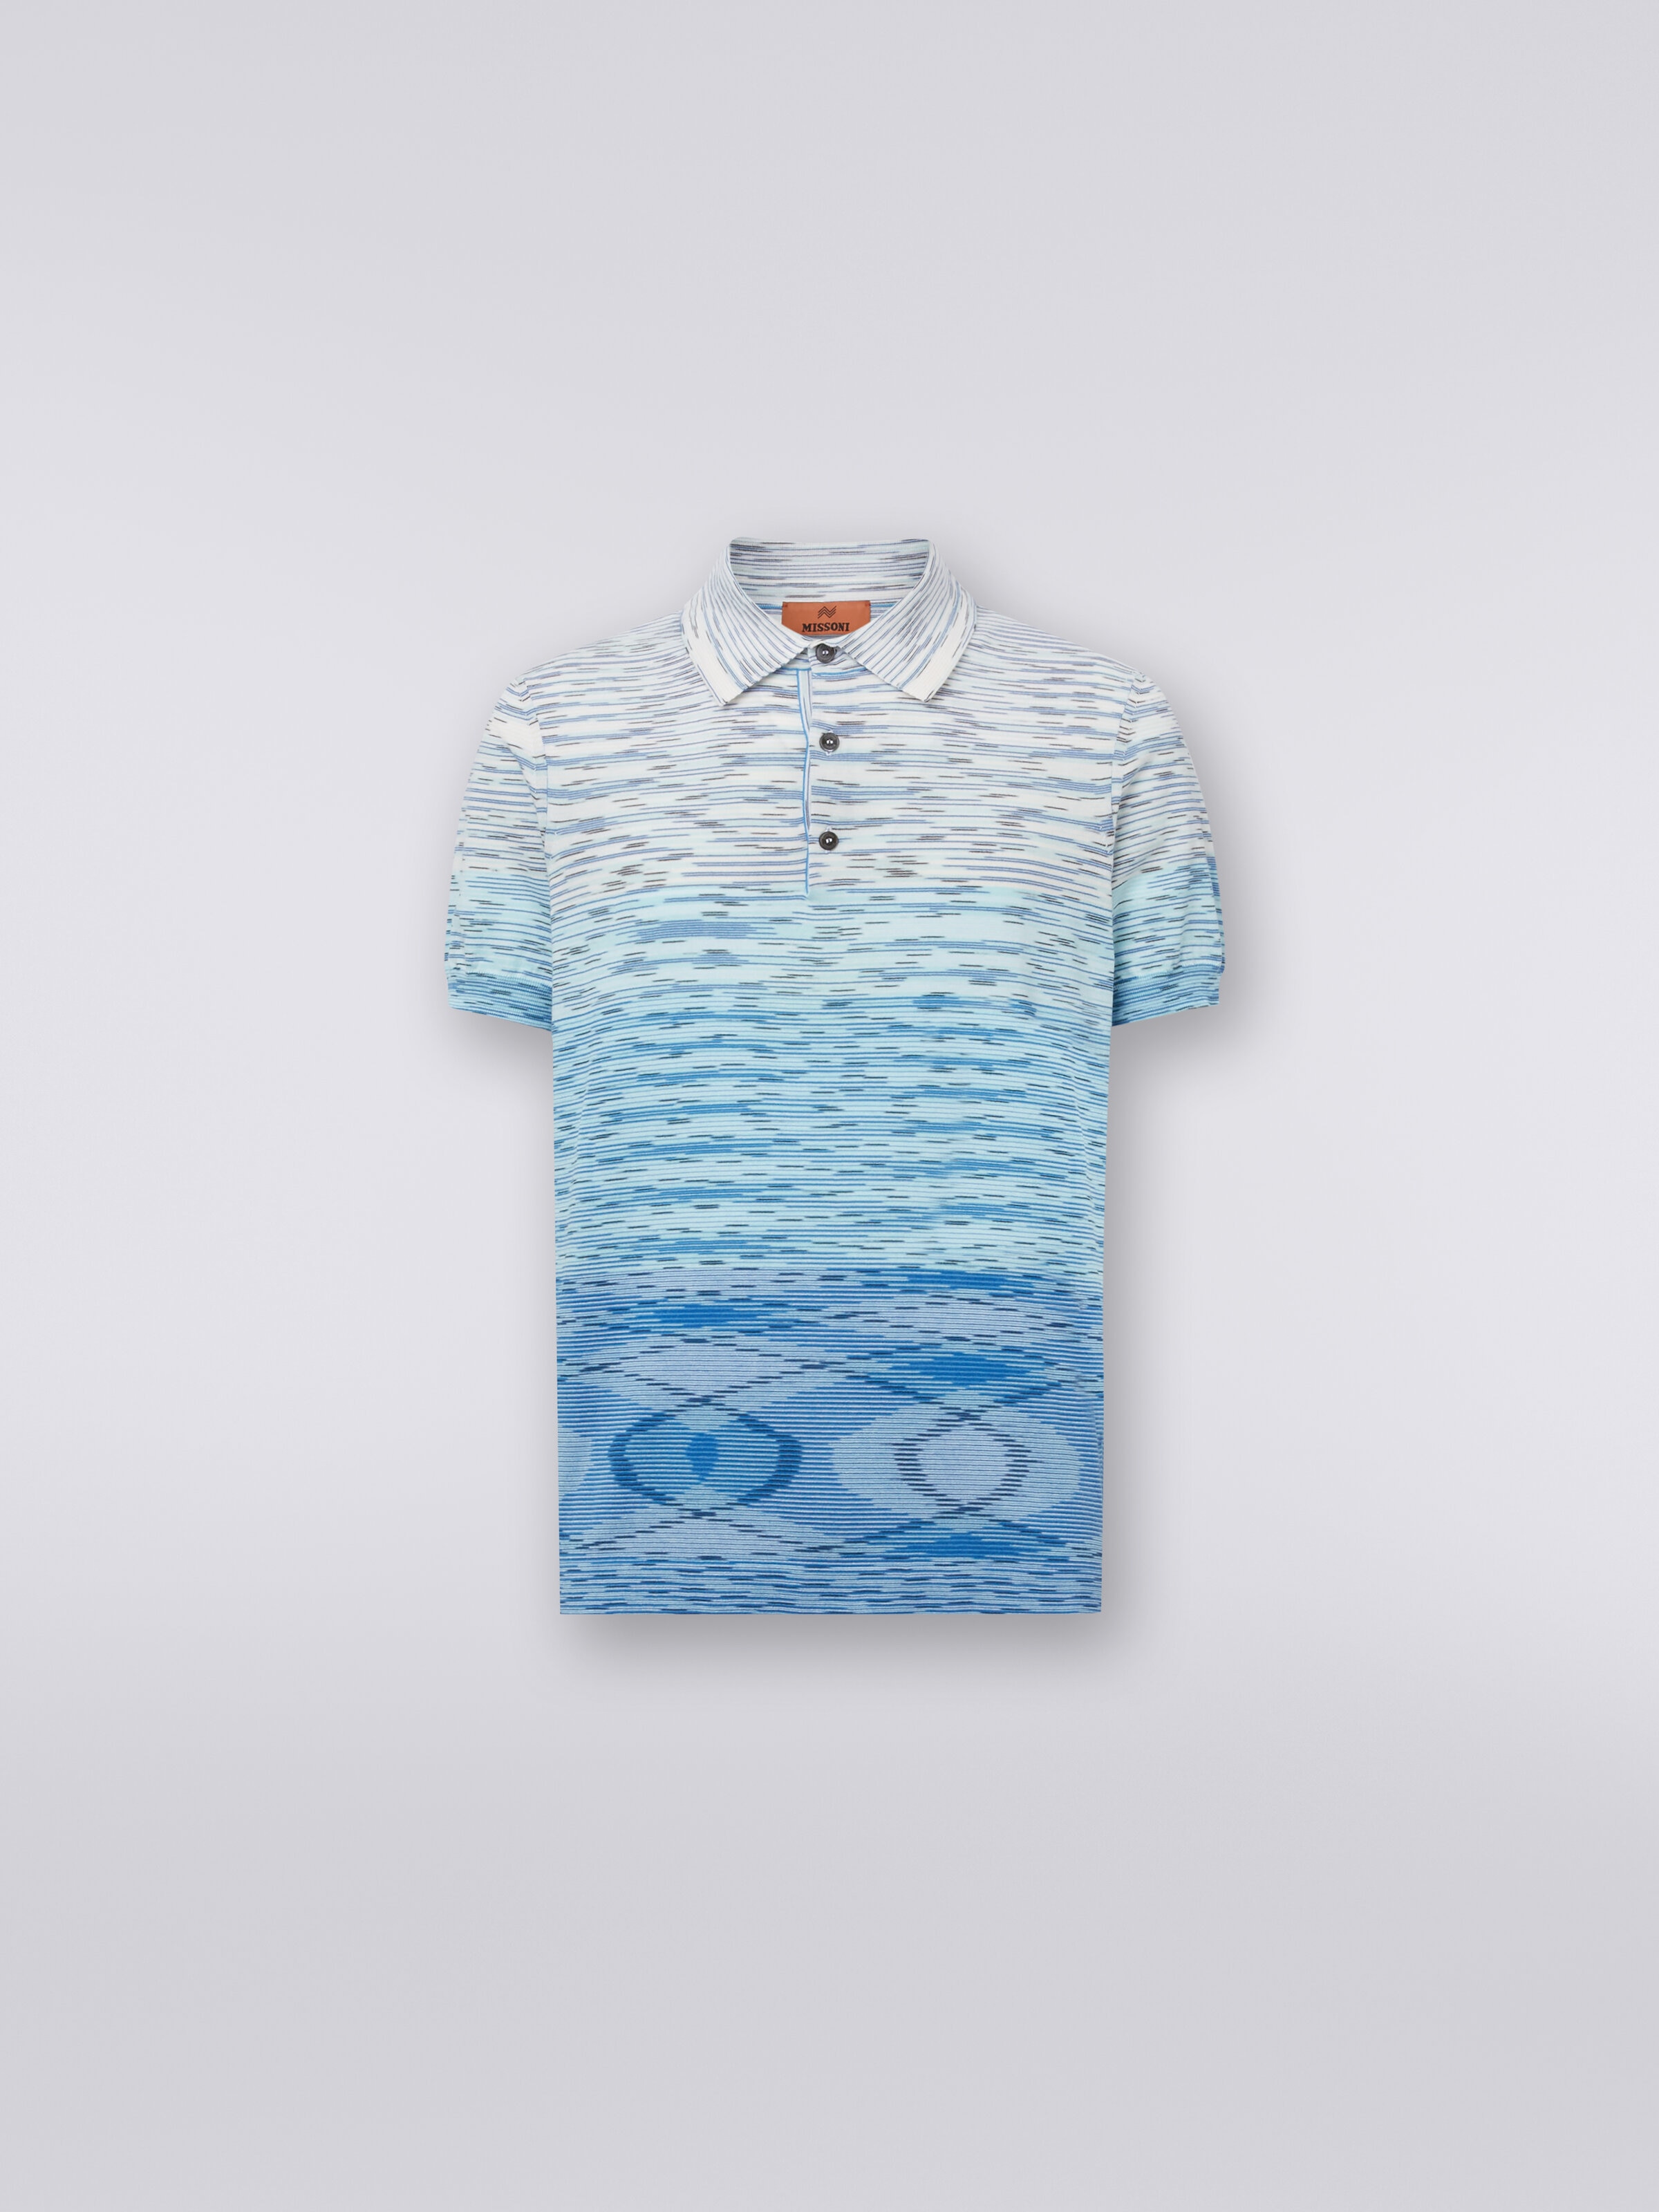 Kurzärmeliges Poloshirt aus Baumwolle in Flammgarnoptik mit Dégradé-Effekt, Mehrfarbig  - 0